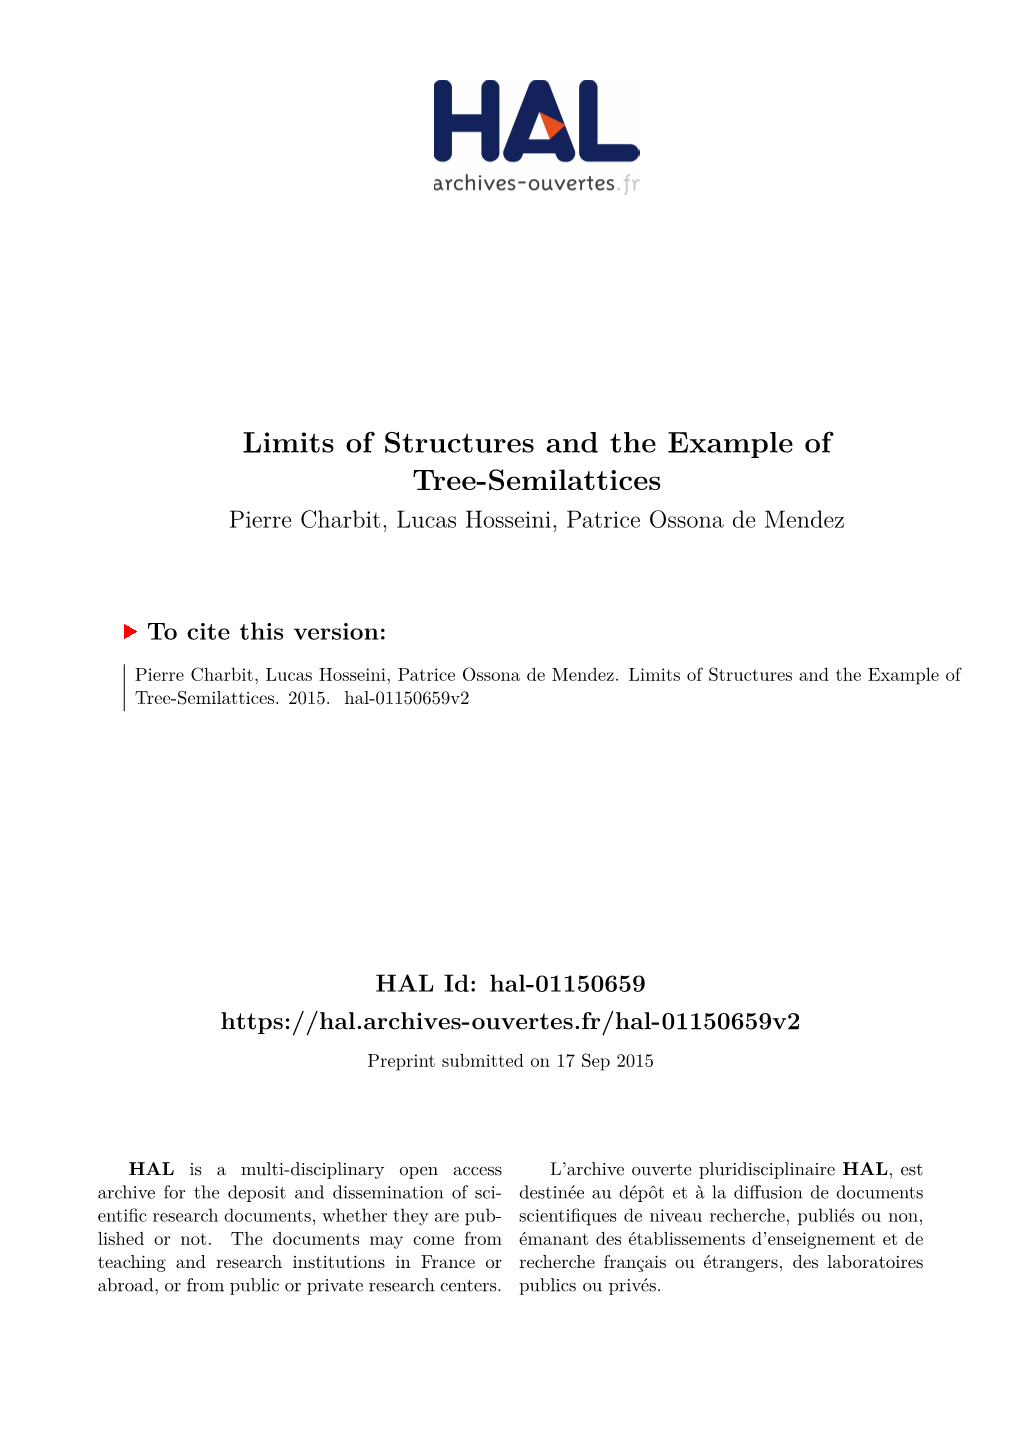 Limits of Structures and the Example of Tree-Semilattices Pierre Charbit, Lucas Hosseini, Patrice Ossona De Mendez